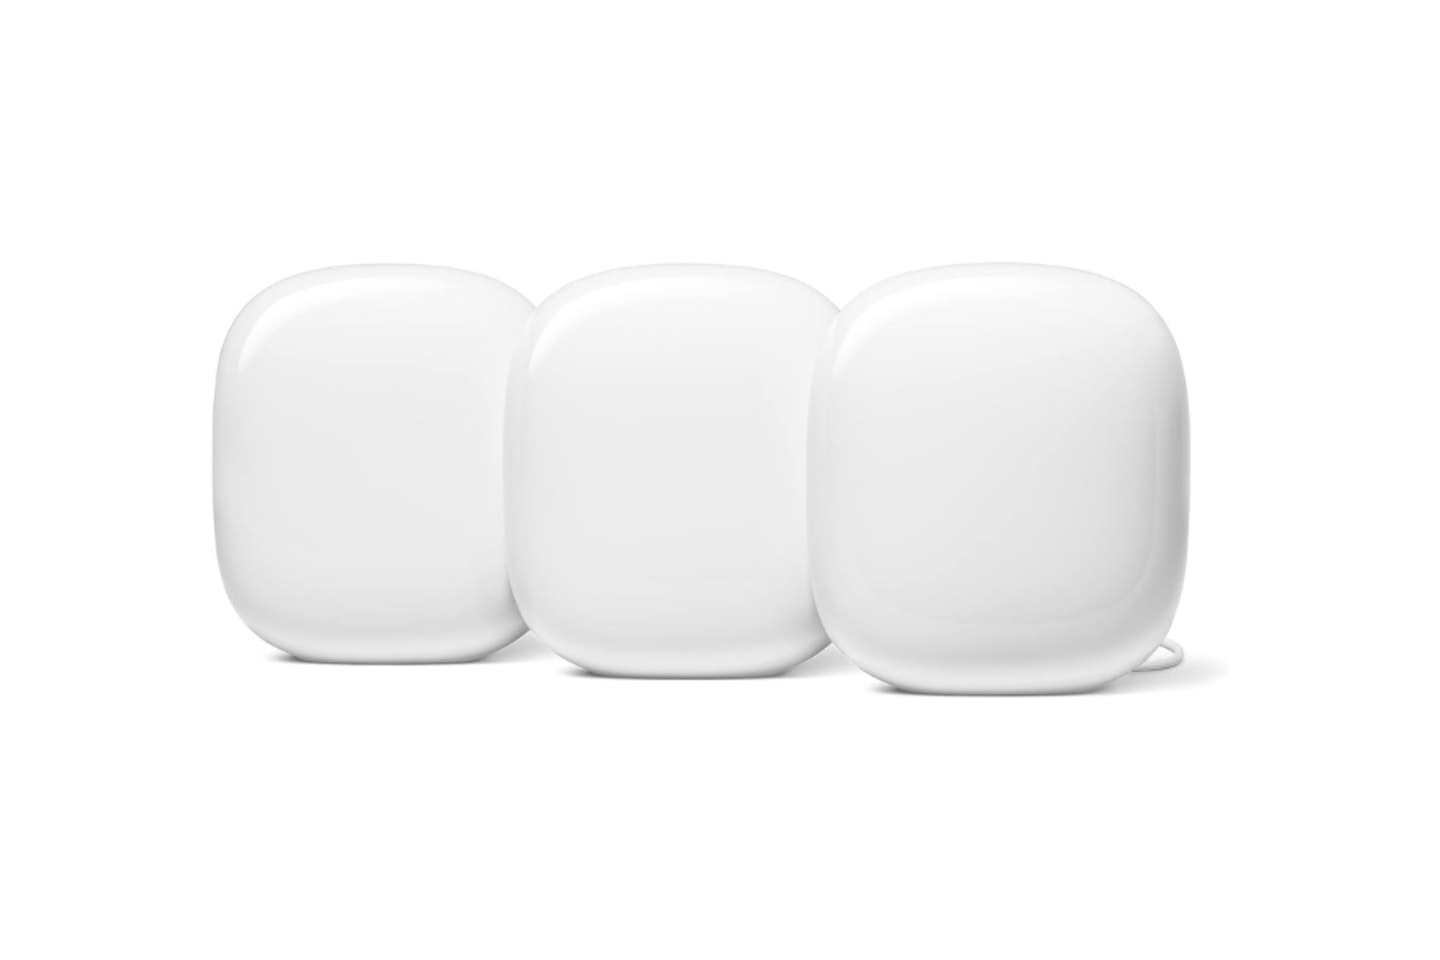 Google Wi-Fi Pro pack of three